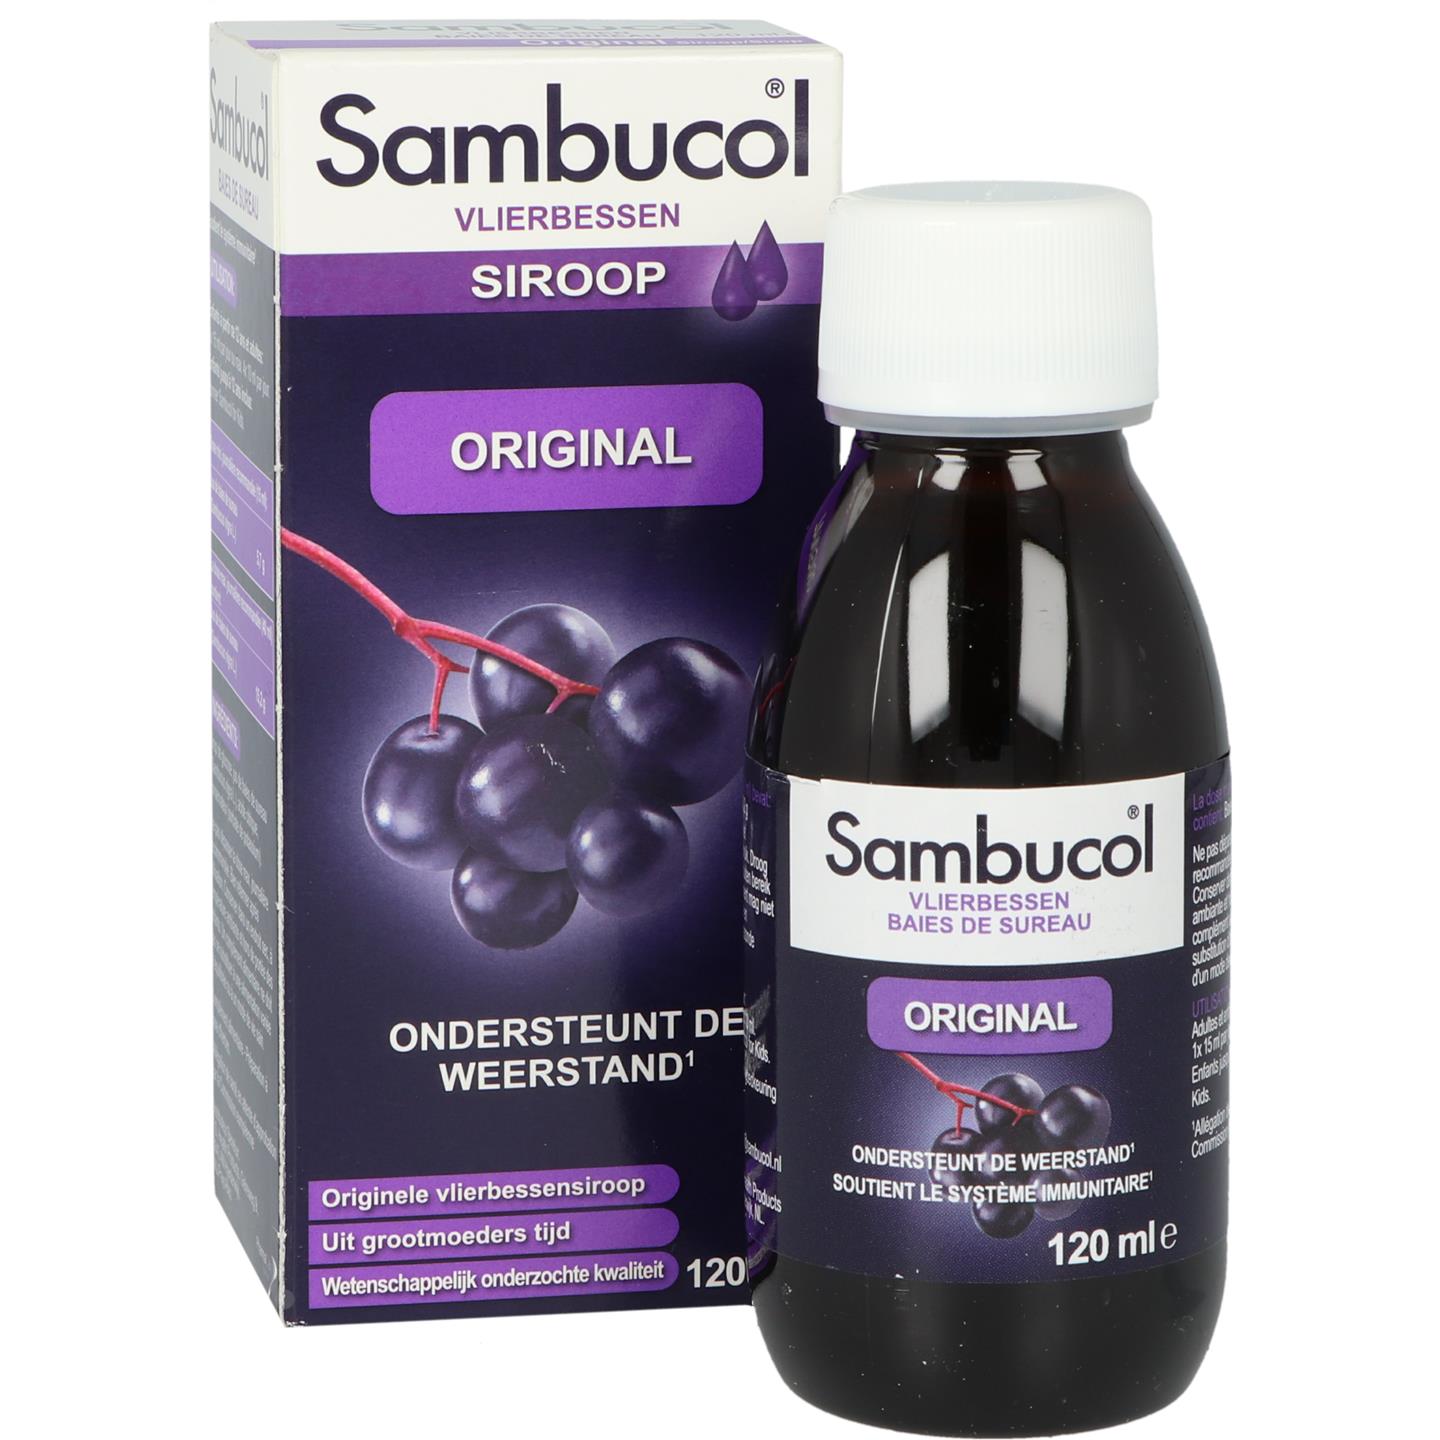 Sambucol Vlierbessen Siroop Original 120ml